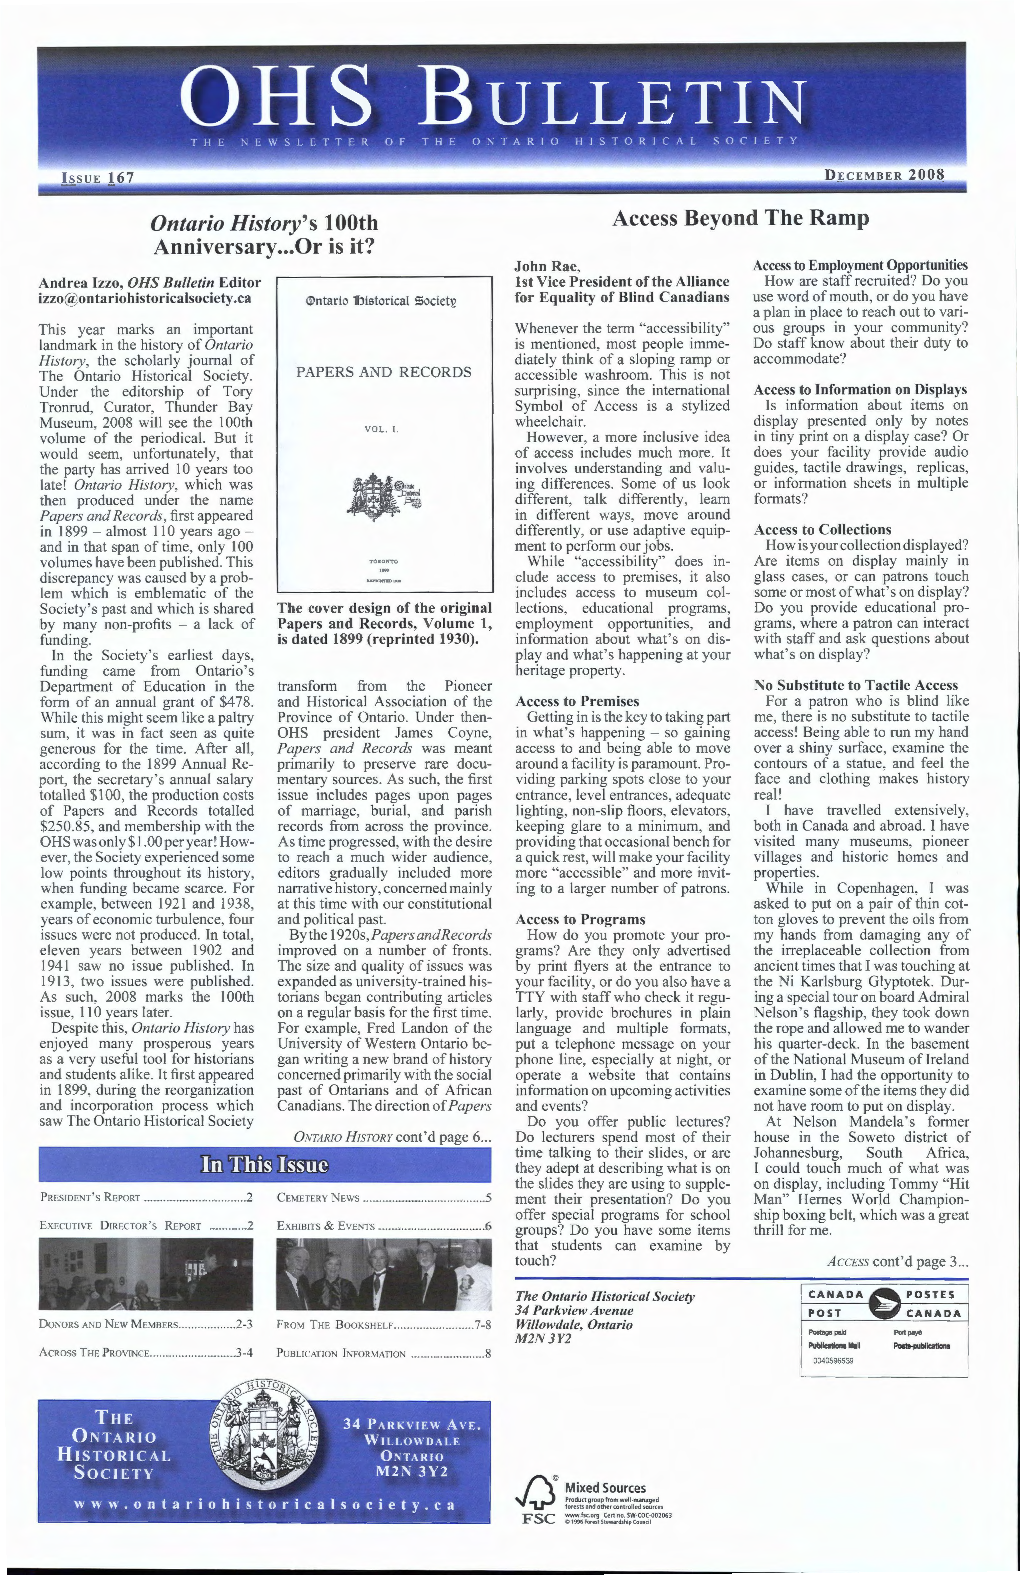 December 2008 OHS Bulletin, Issue